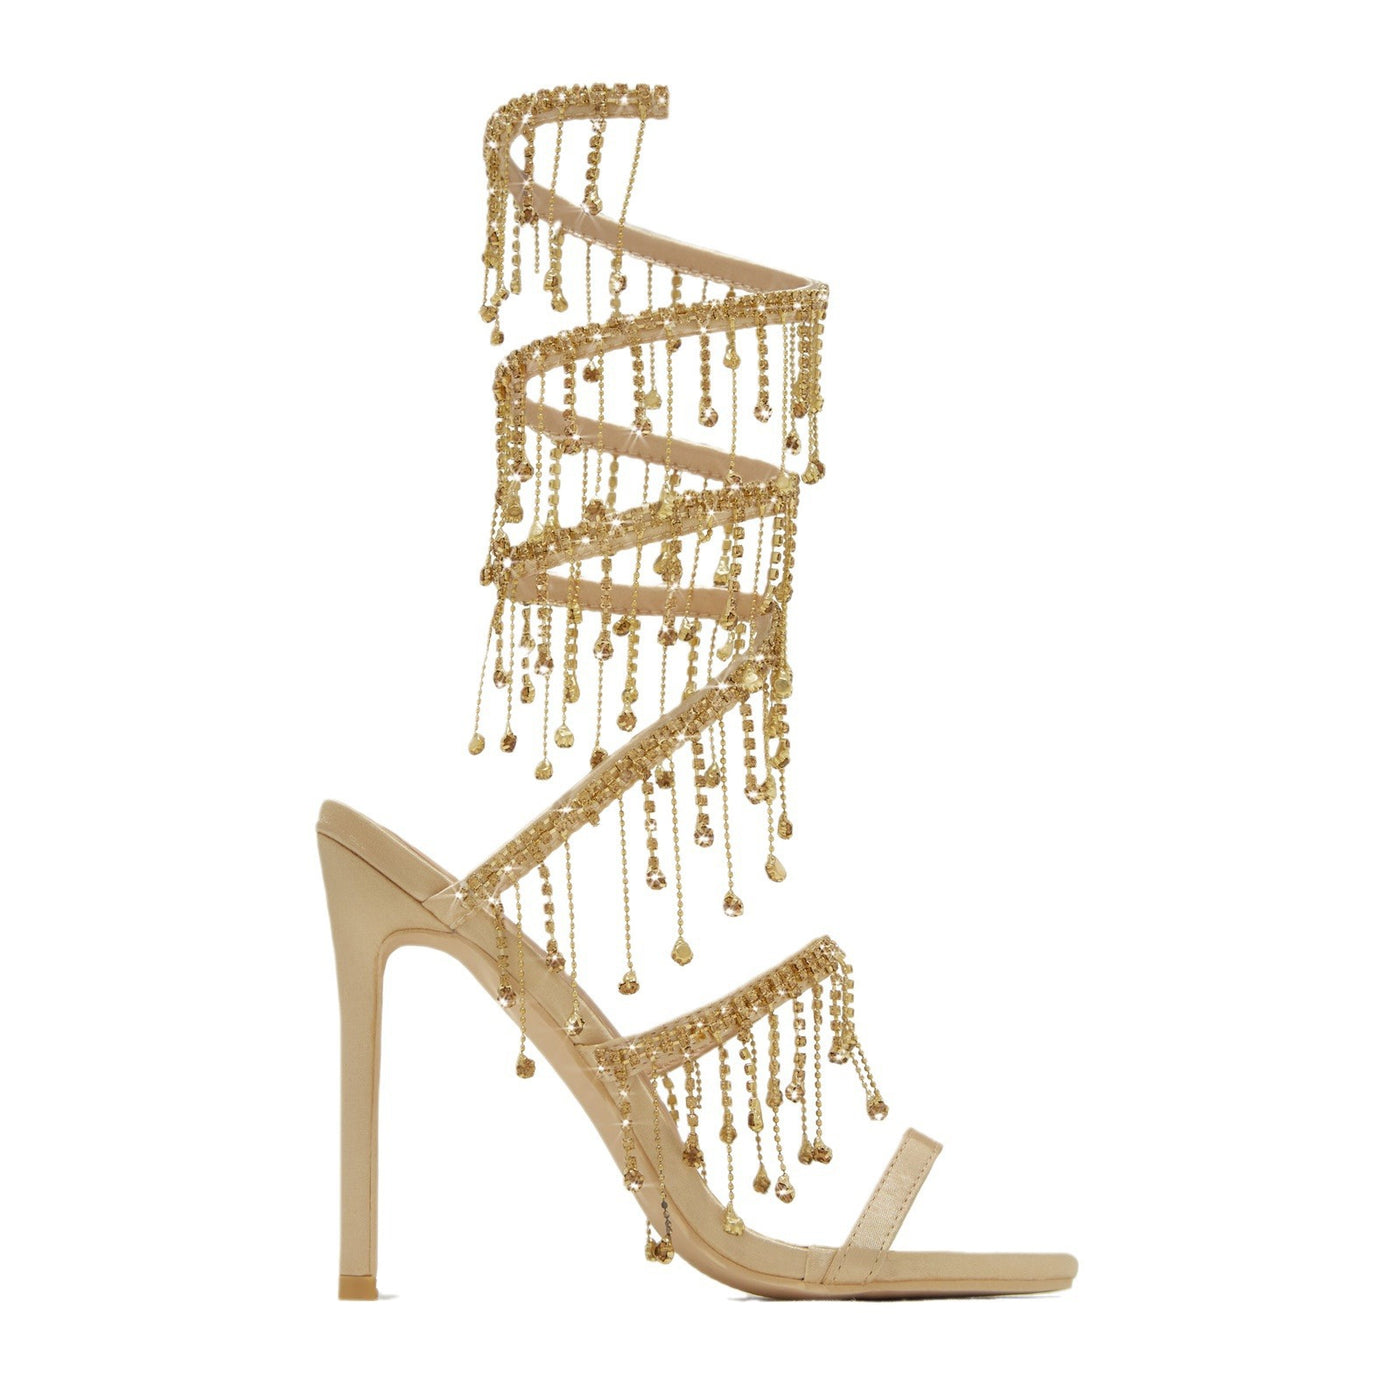 New Black Gold 11cm Stiletto Heel Small Round Toe Satin Surface Rhinestone High-heeled Sandals Summer Rivet